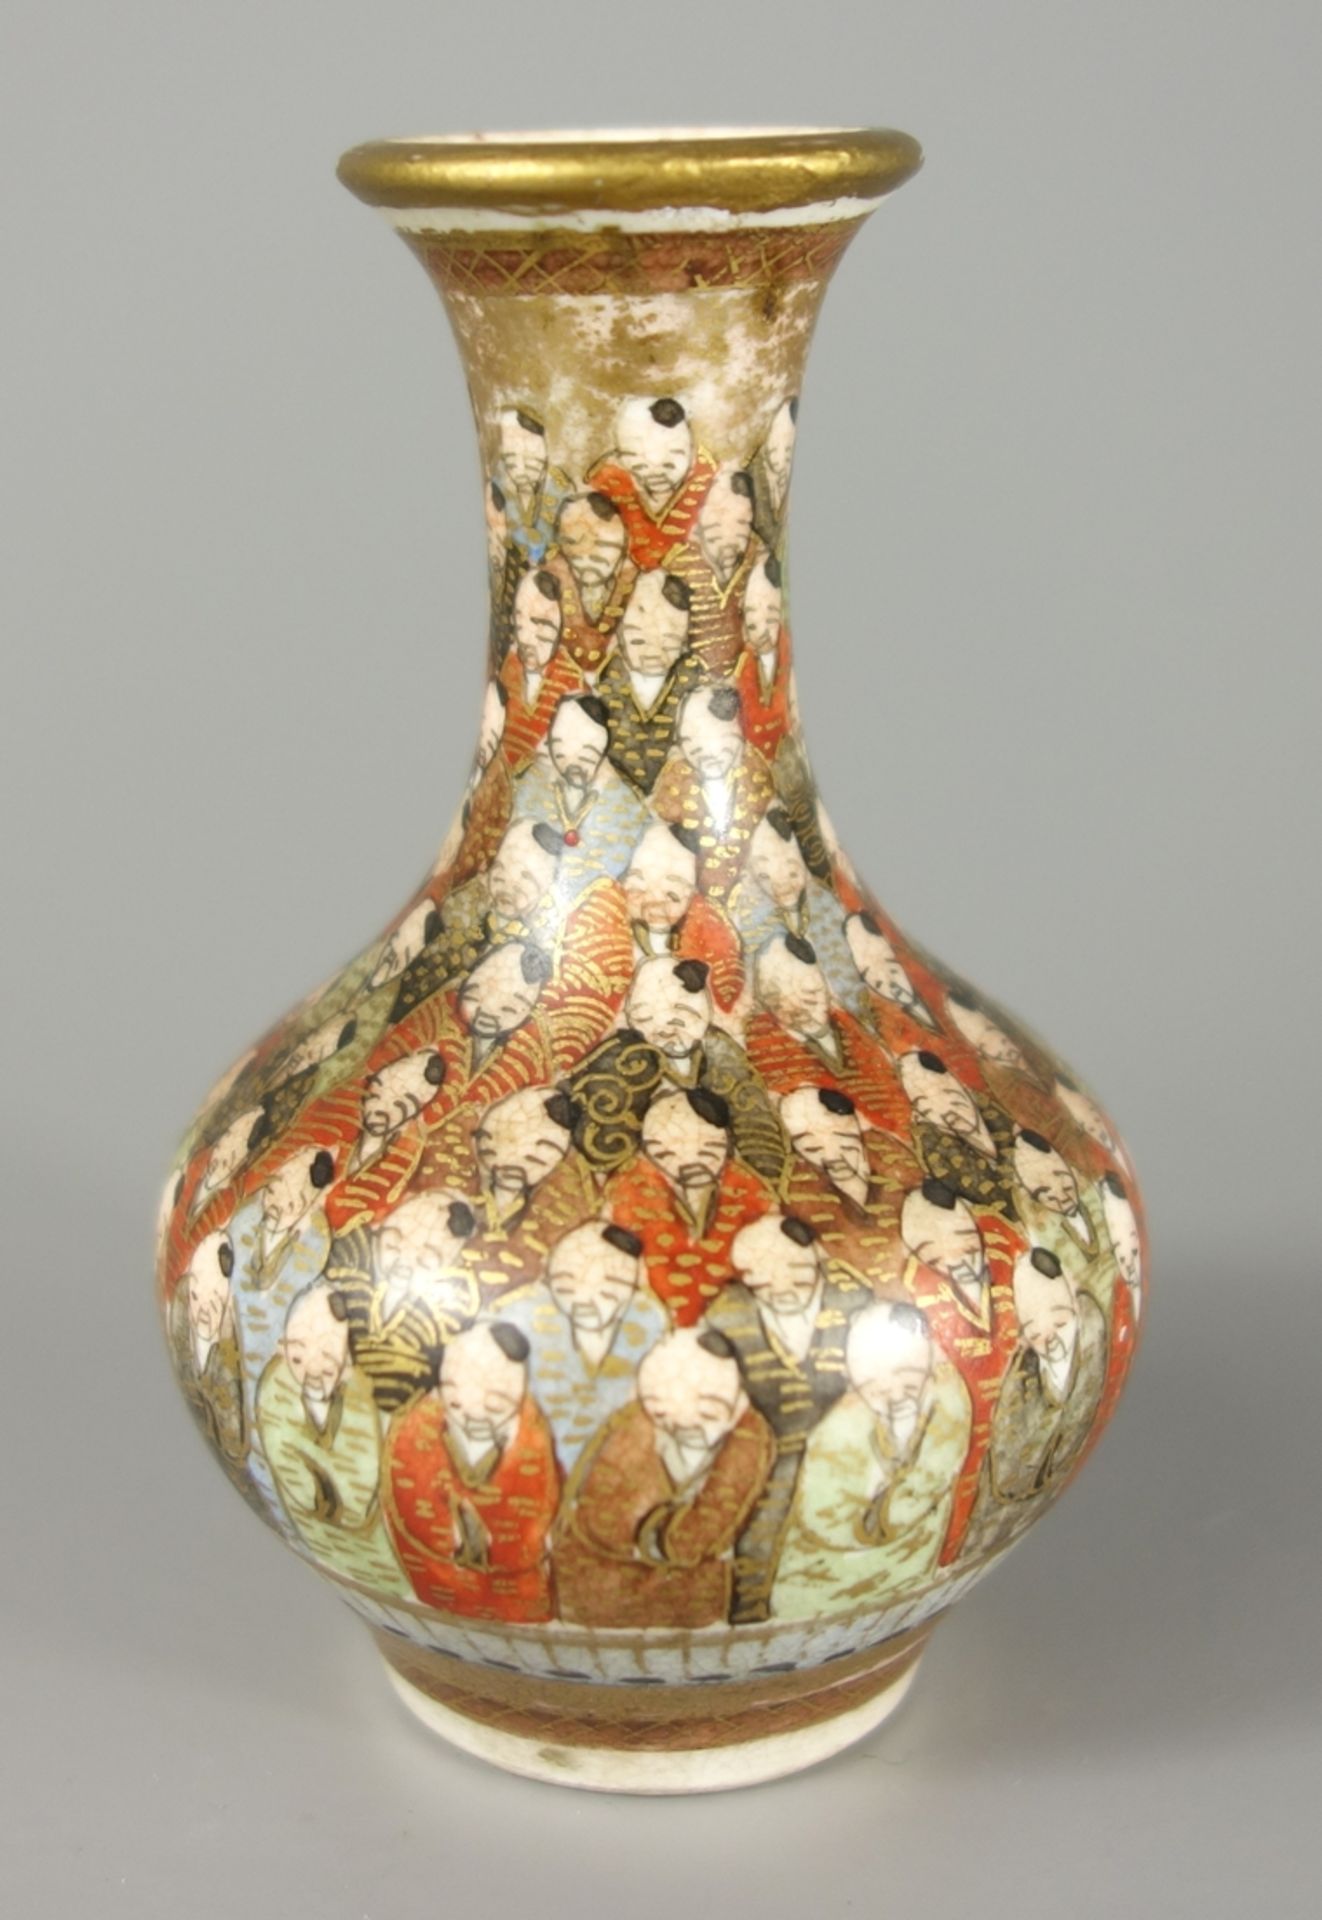 signierte Satsuma Vase "1000 Gesichter", Japan, Meji- Periode, H.7,8cm, Vergoldung min.berieben